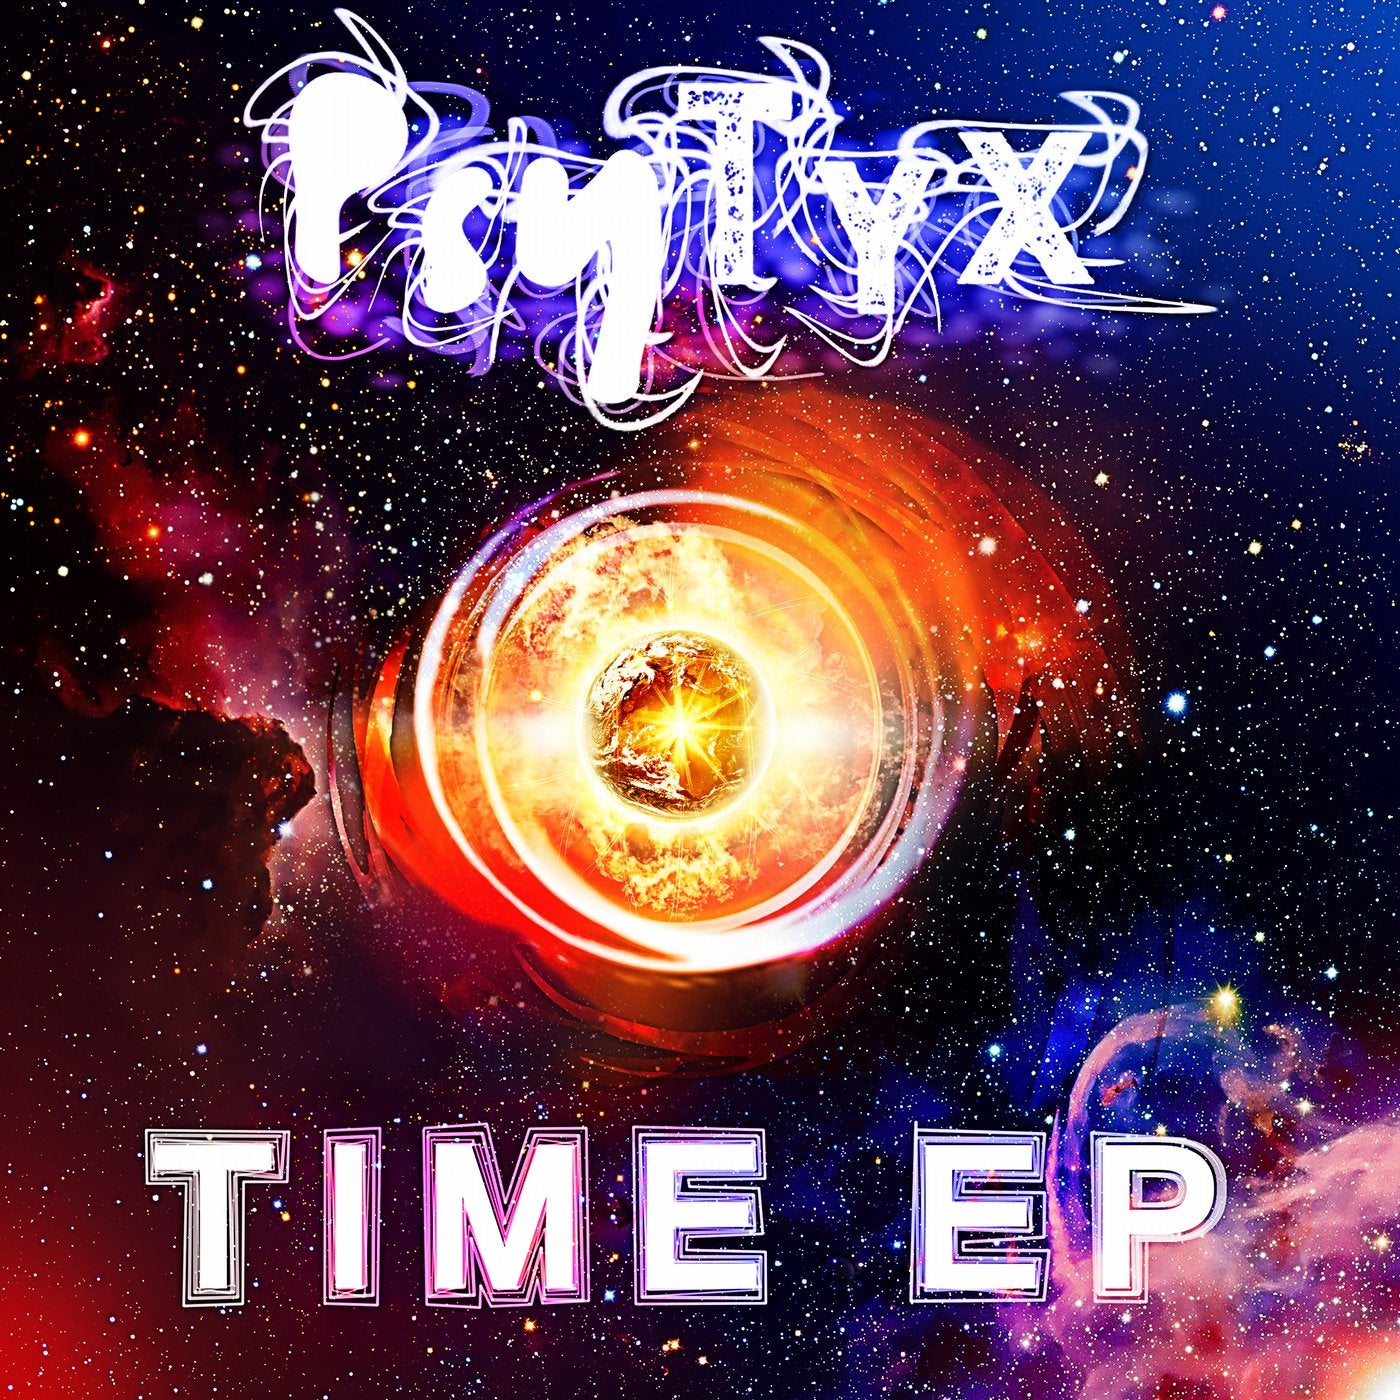 Time EP